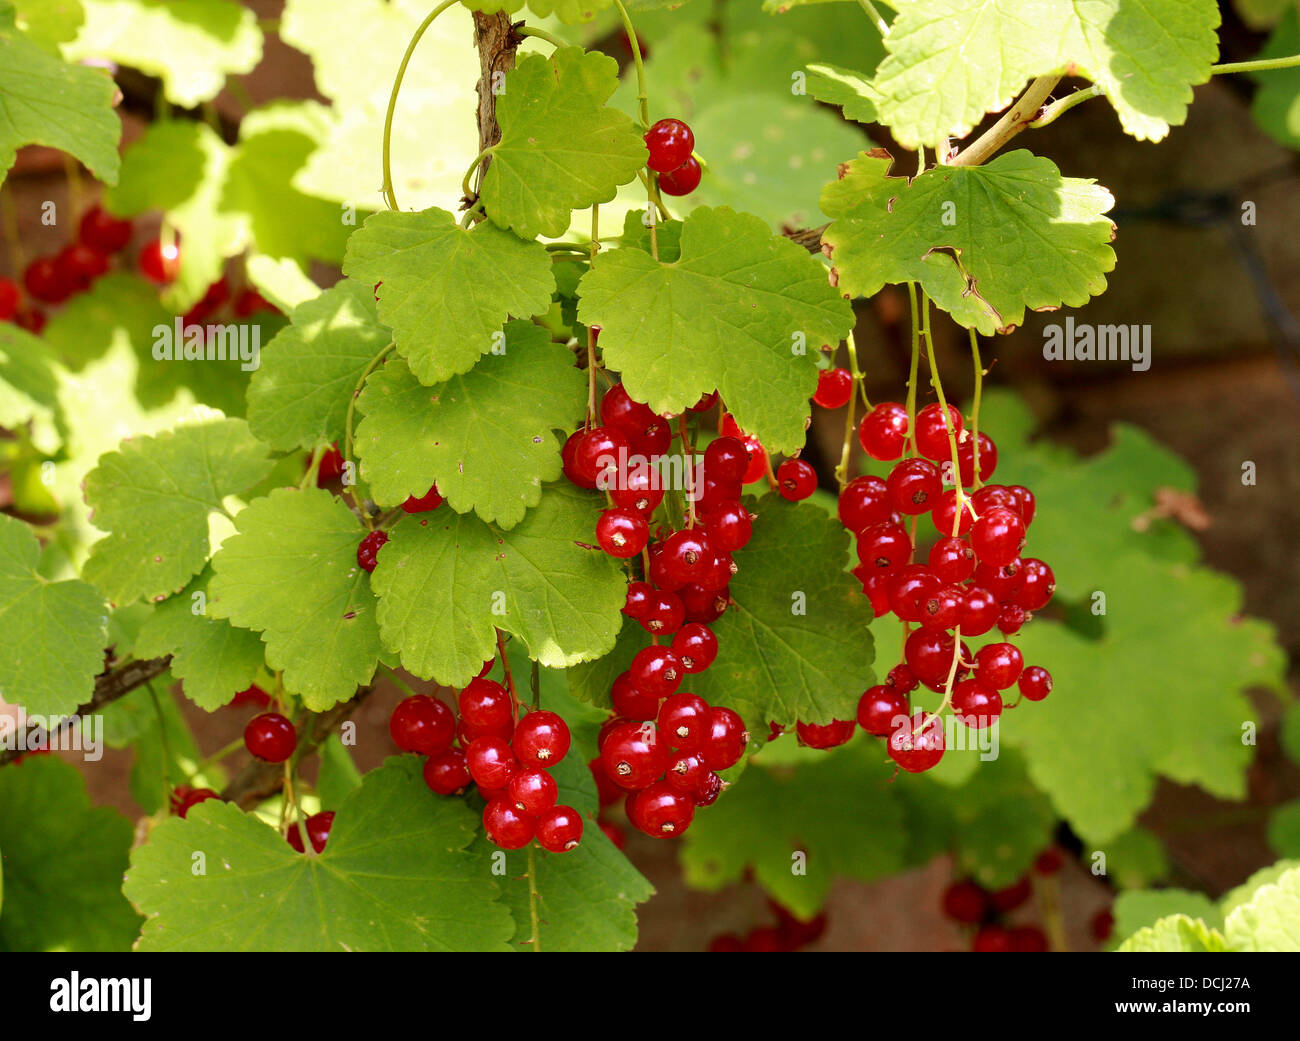 Johannisbeeren (oder rote Johannisbeere) Obst, Ribes Rubrum, Grossulariaceae Stockfoto